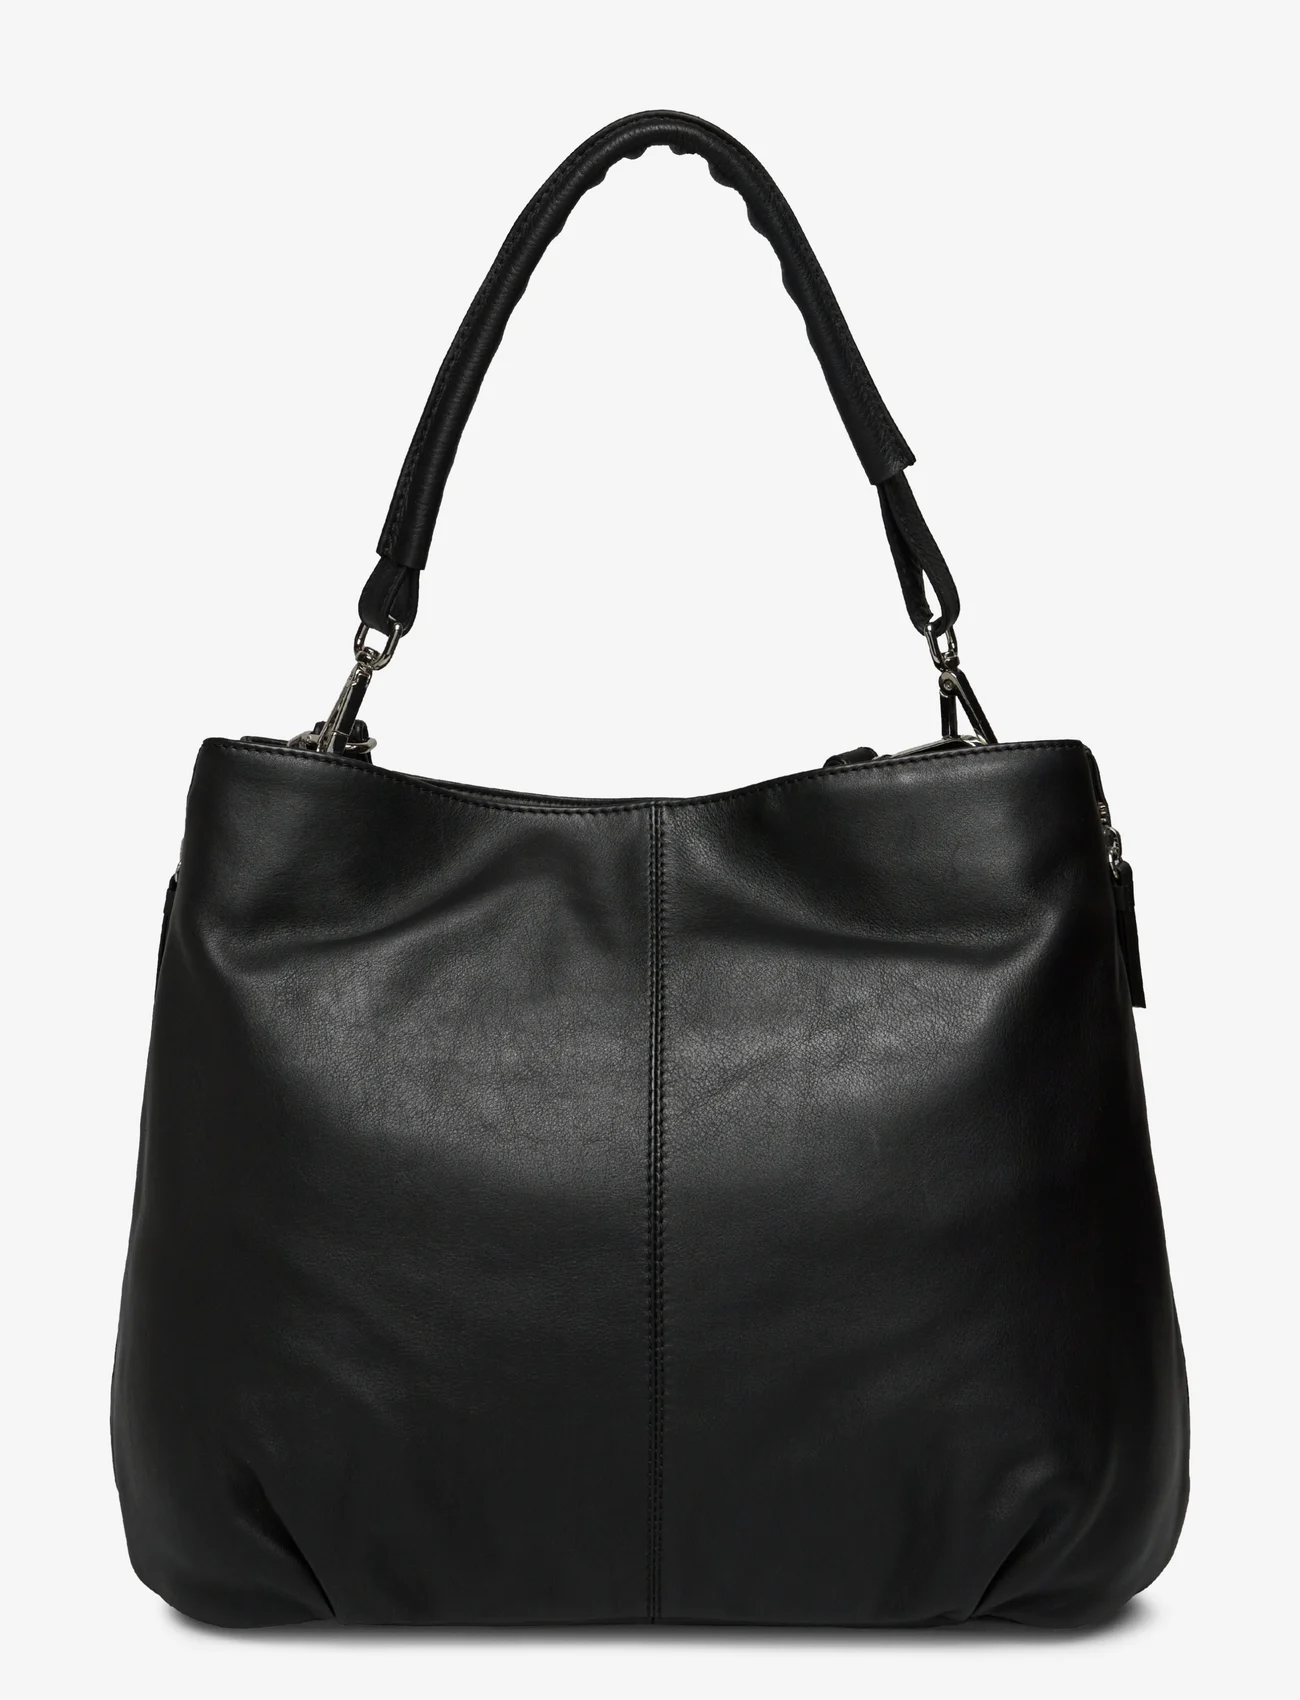 Markberg - DanaMBG Large Bag - feestelijke kleding voor outlet-prijzen - black - 1